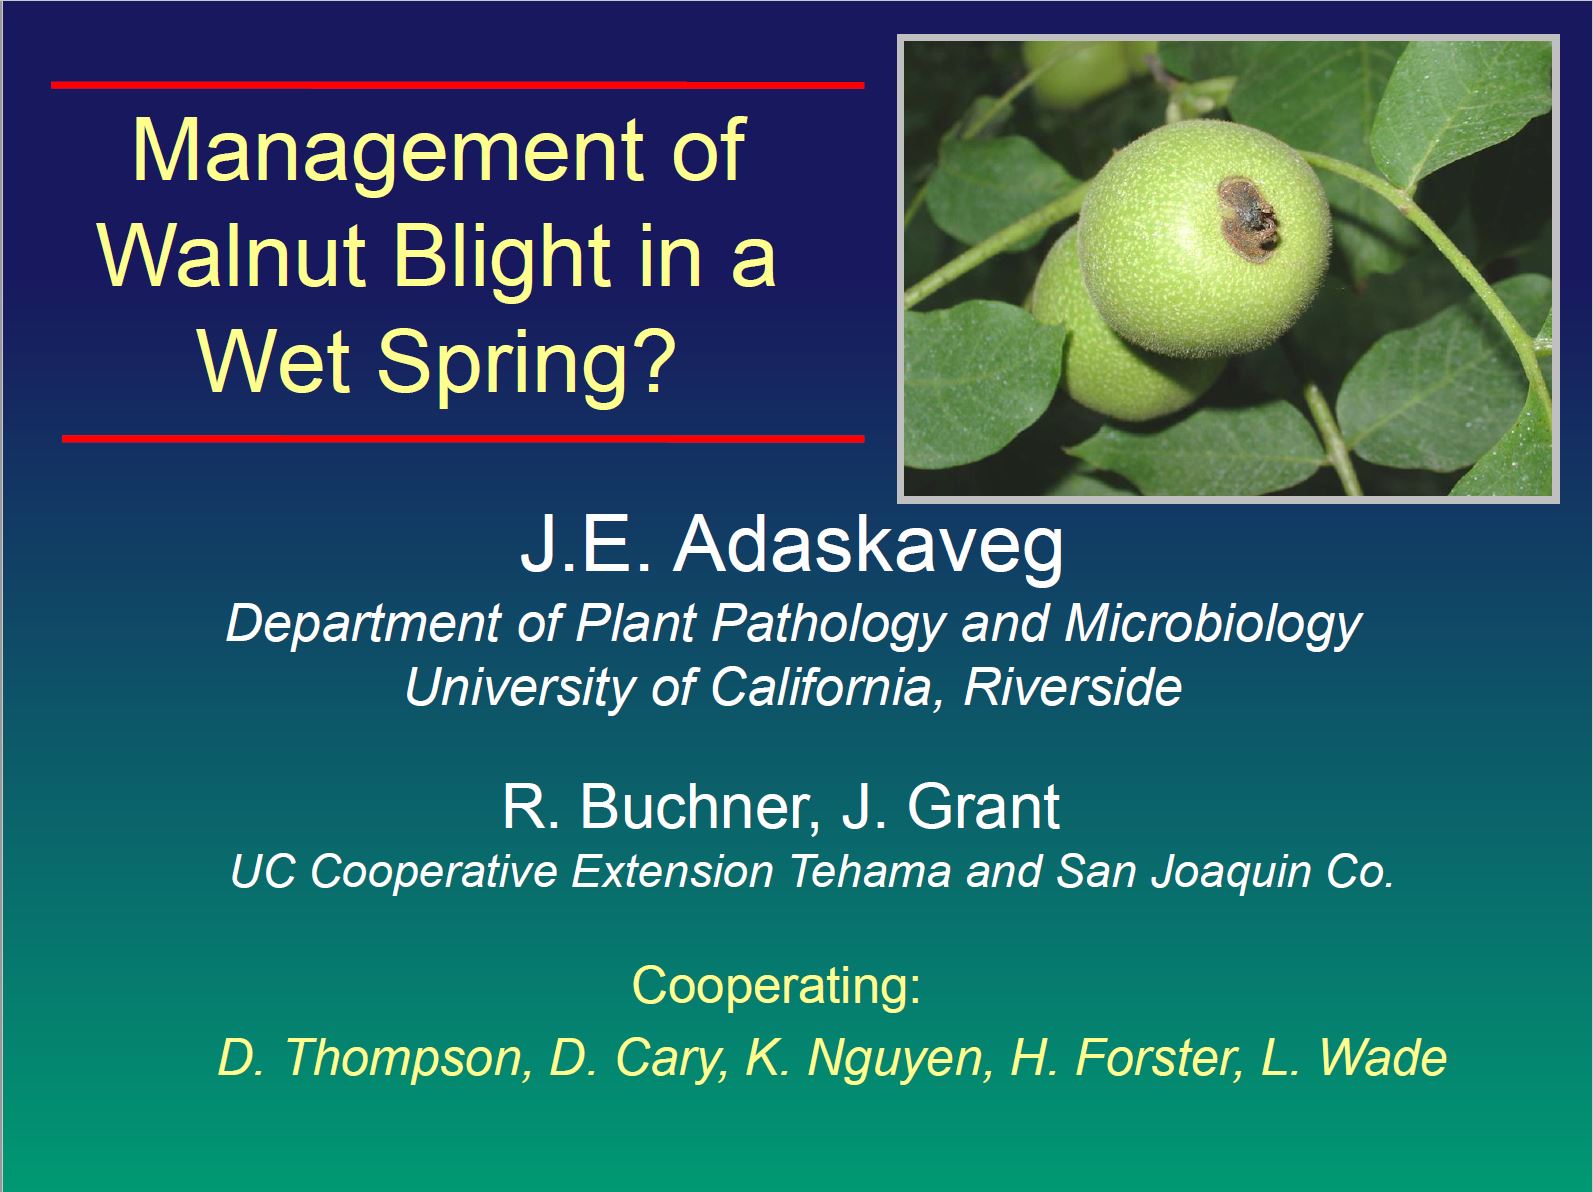 Walnut Blight Research Dr. Jim Adaskaveg